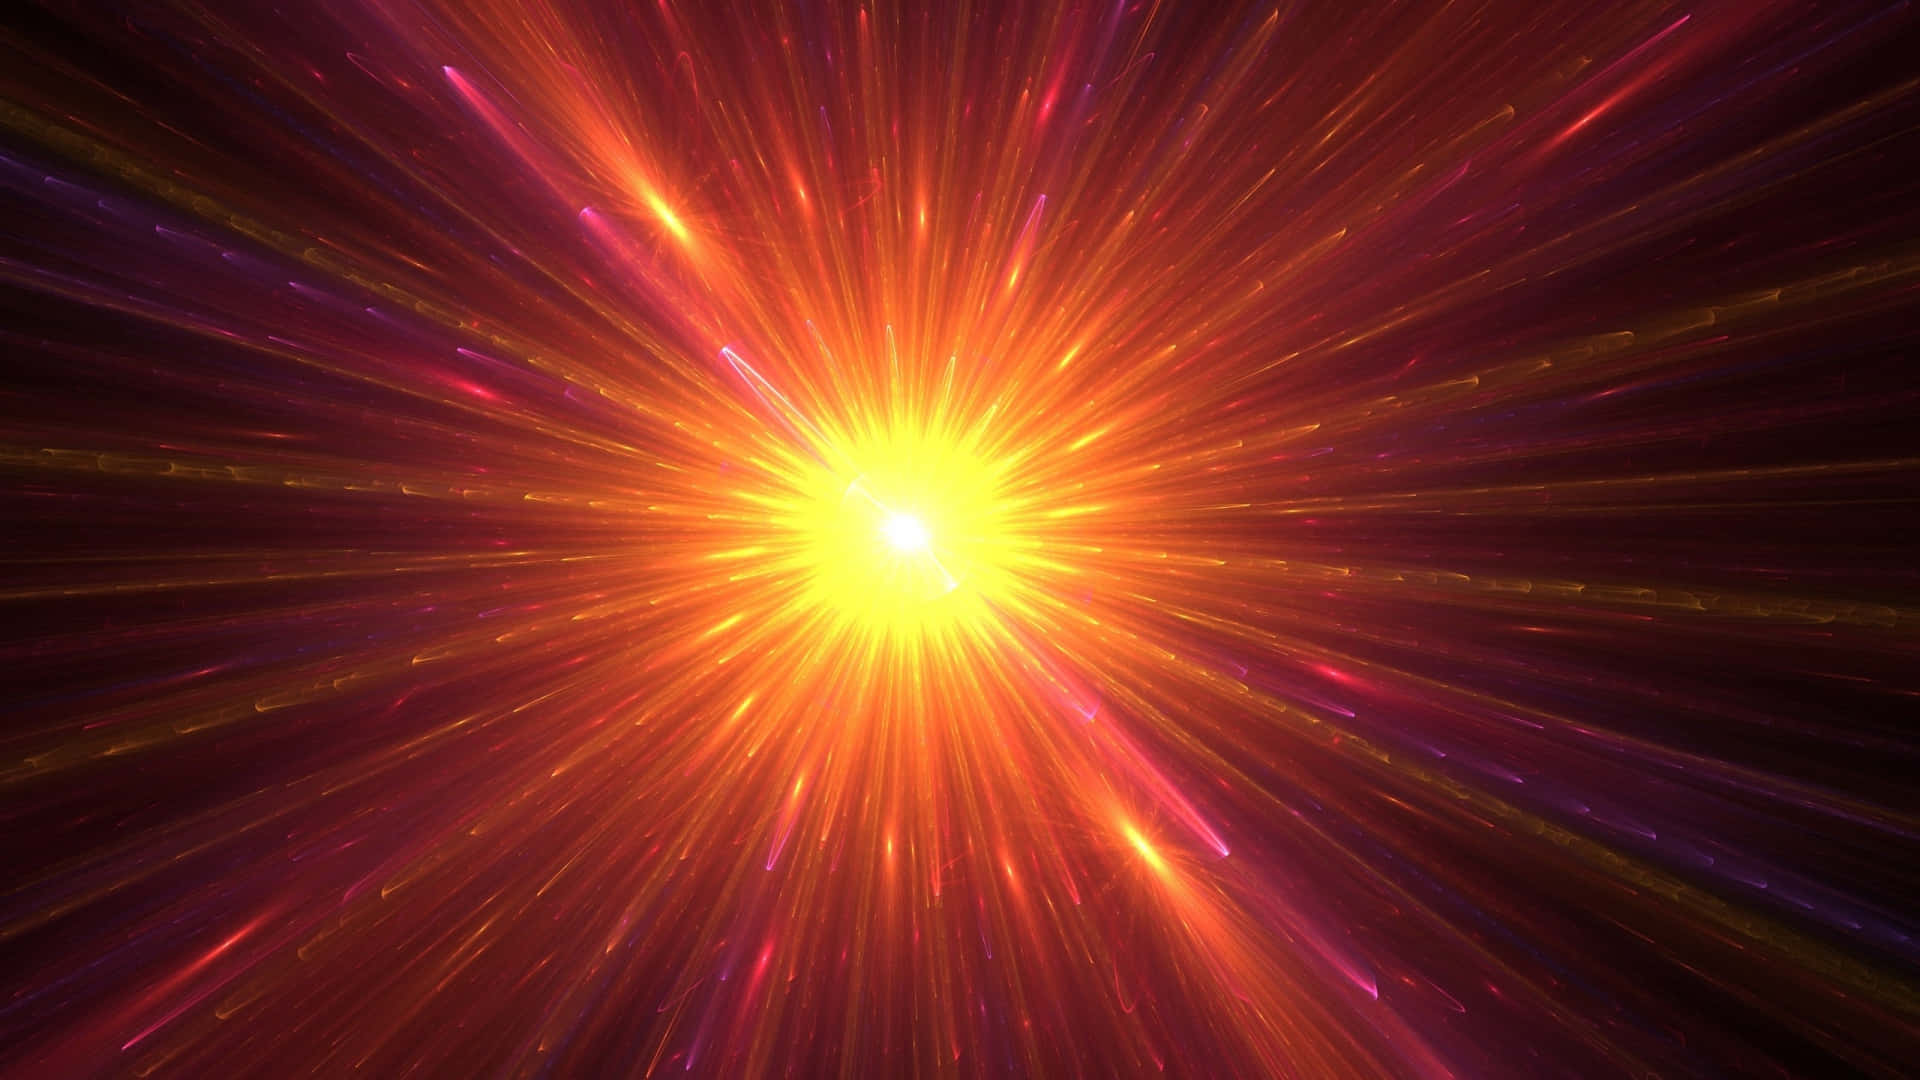 A mesmerizing view of interstellar cosmic rays Wallpaper